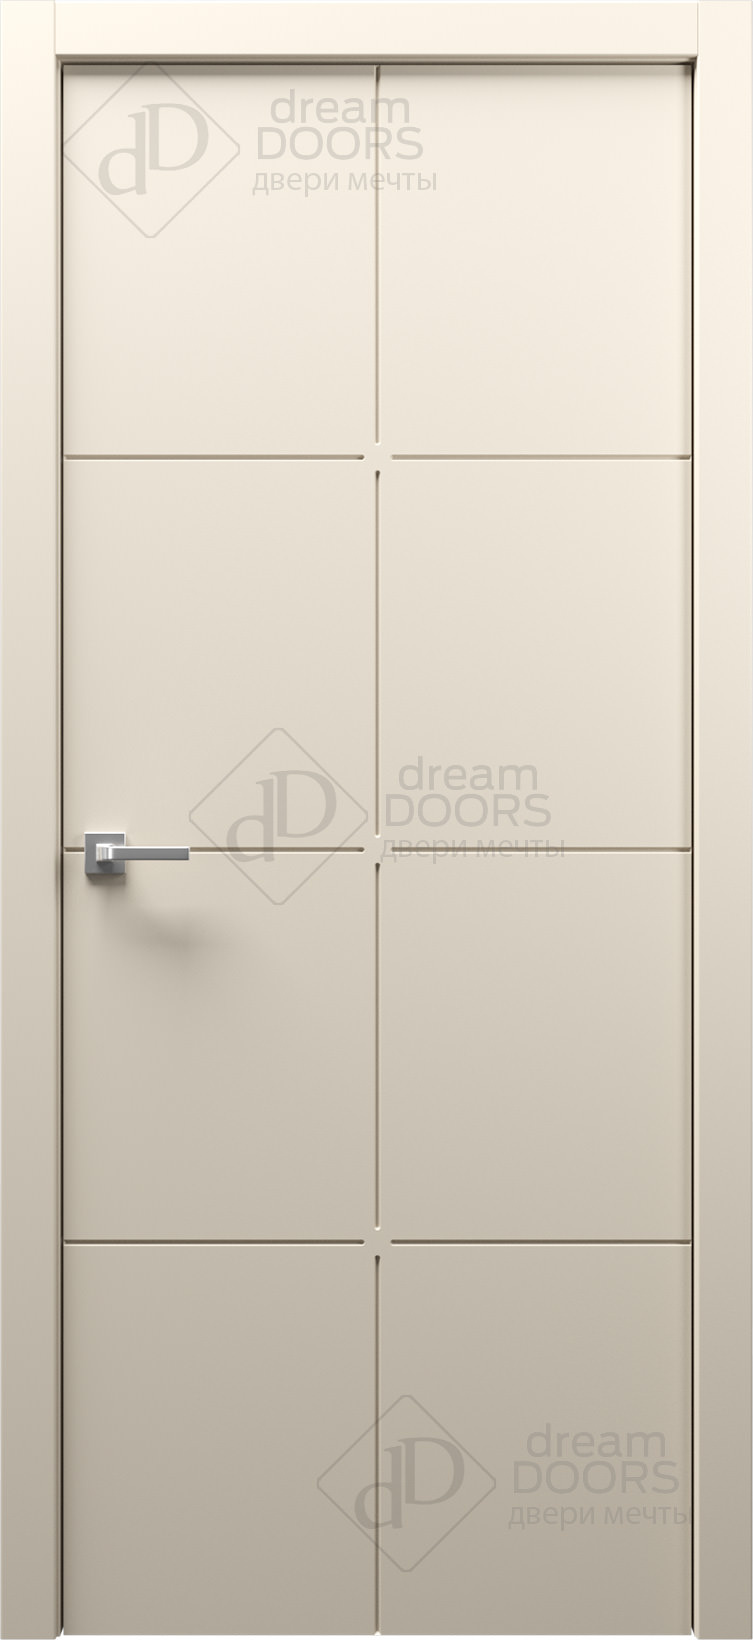 Dream Doors Межкомнатная дверь I26, арт. 6250 - фото №1